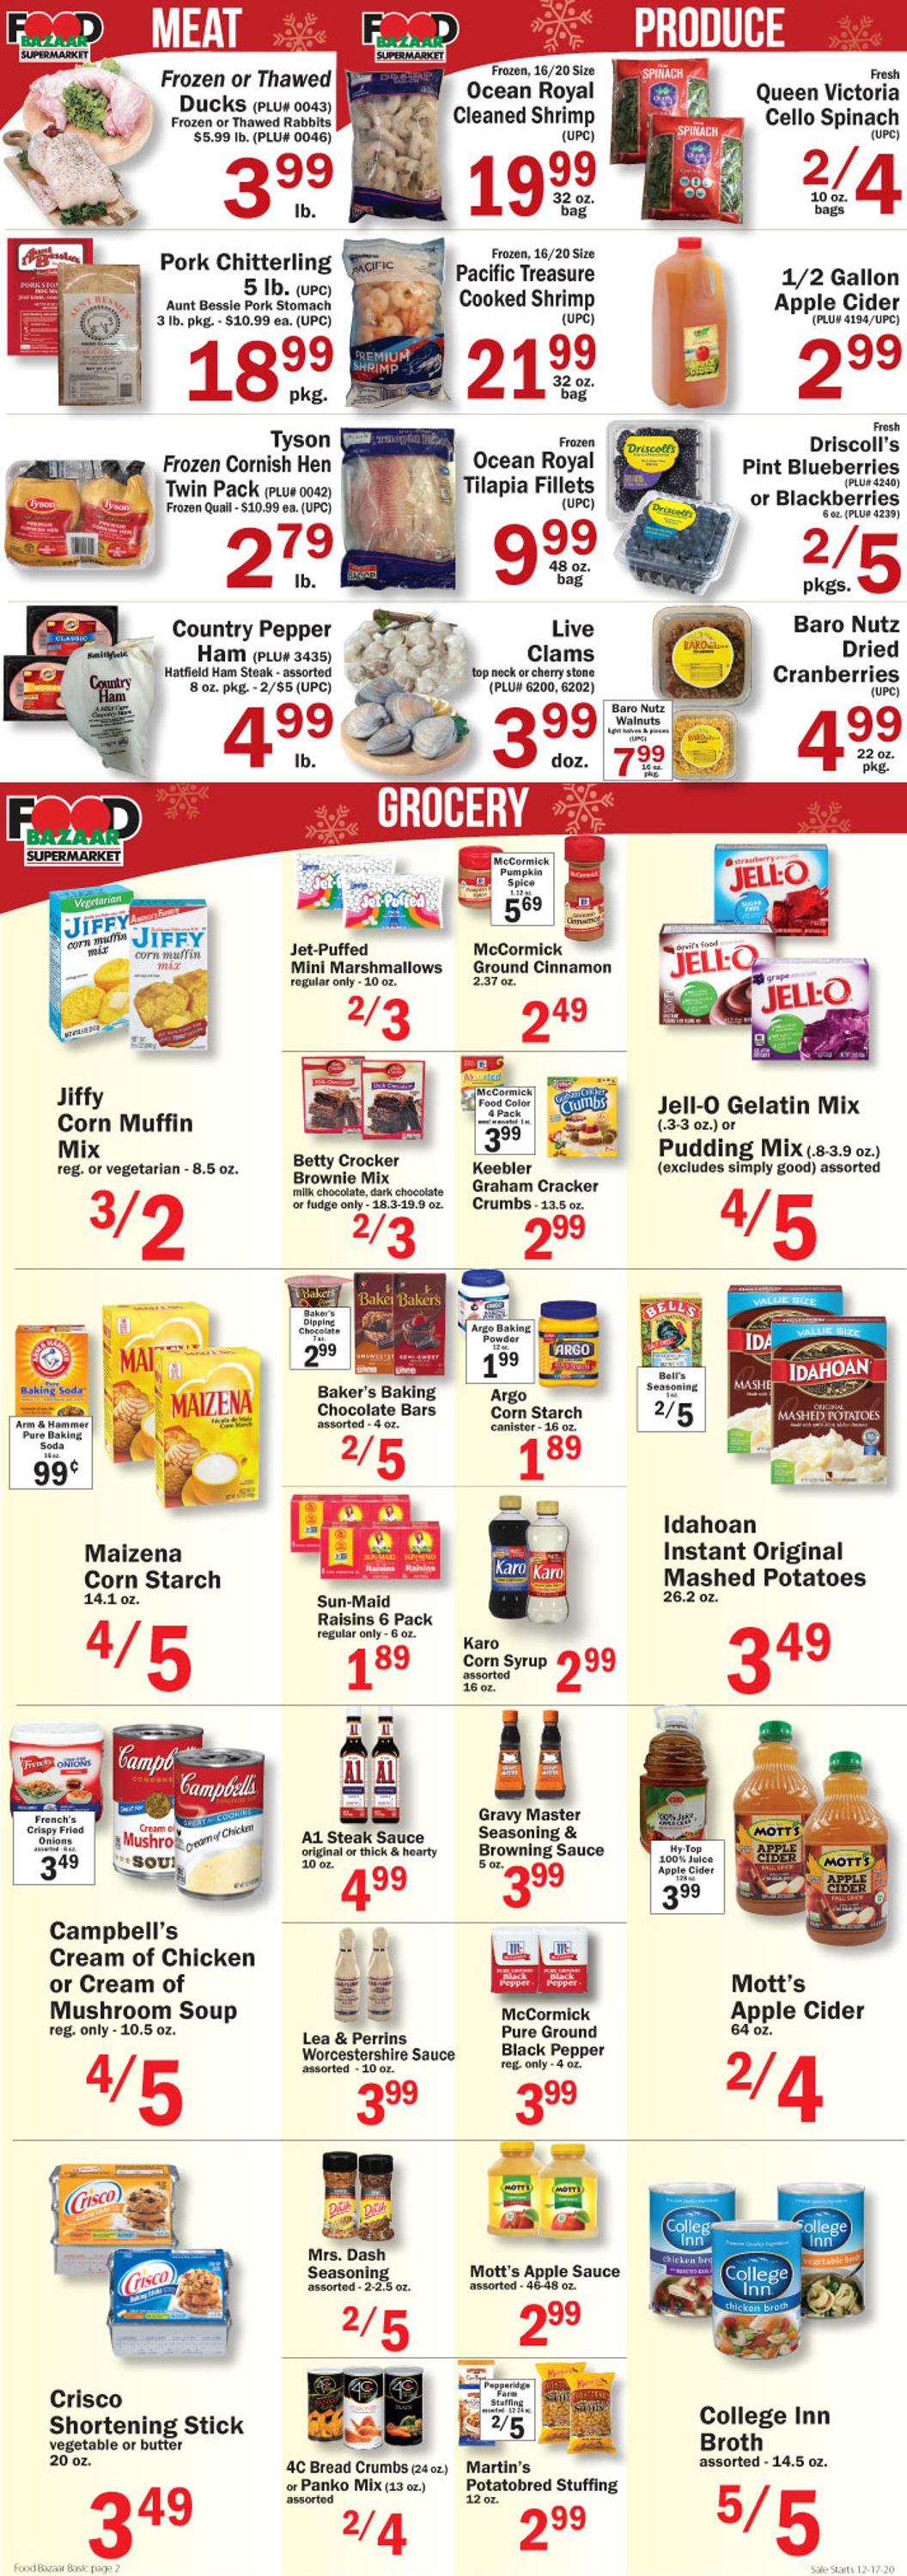 Catalogue Food Bazaar Christmas Ad 2020 from 12/17/2020